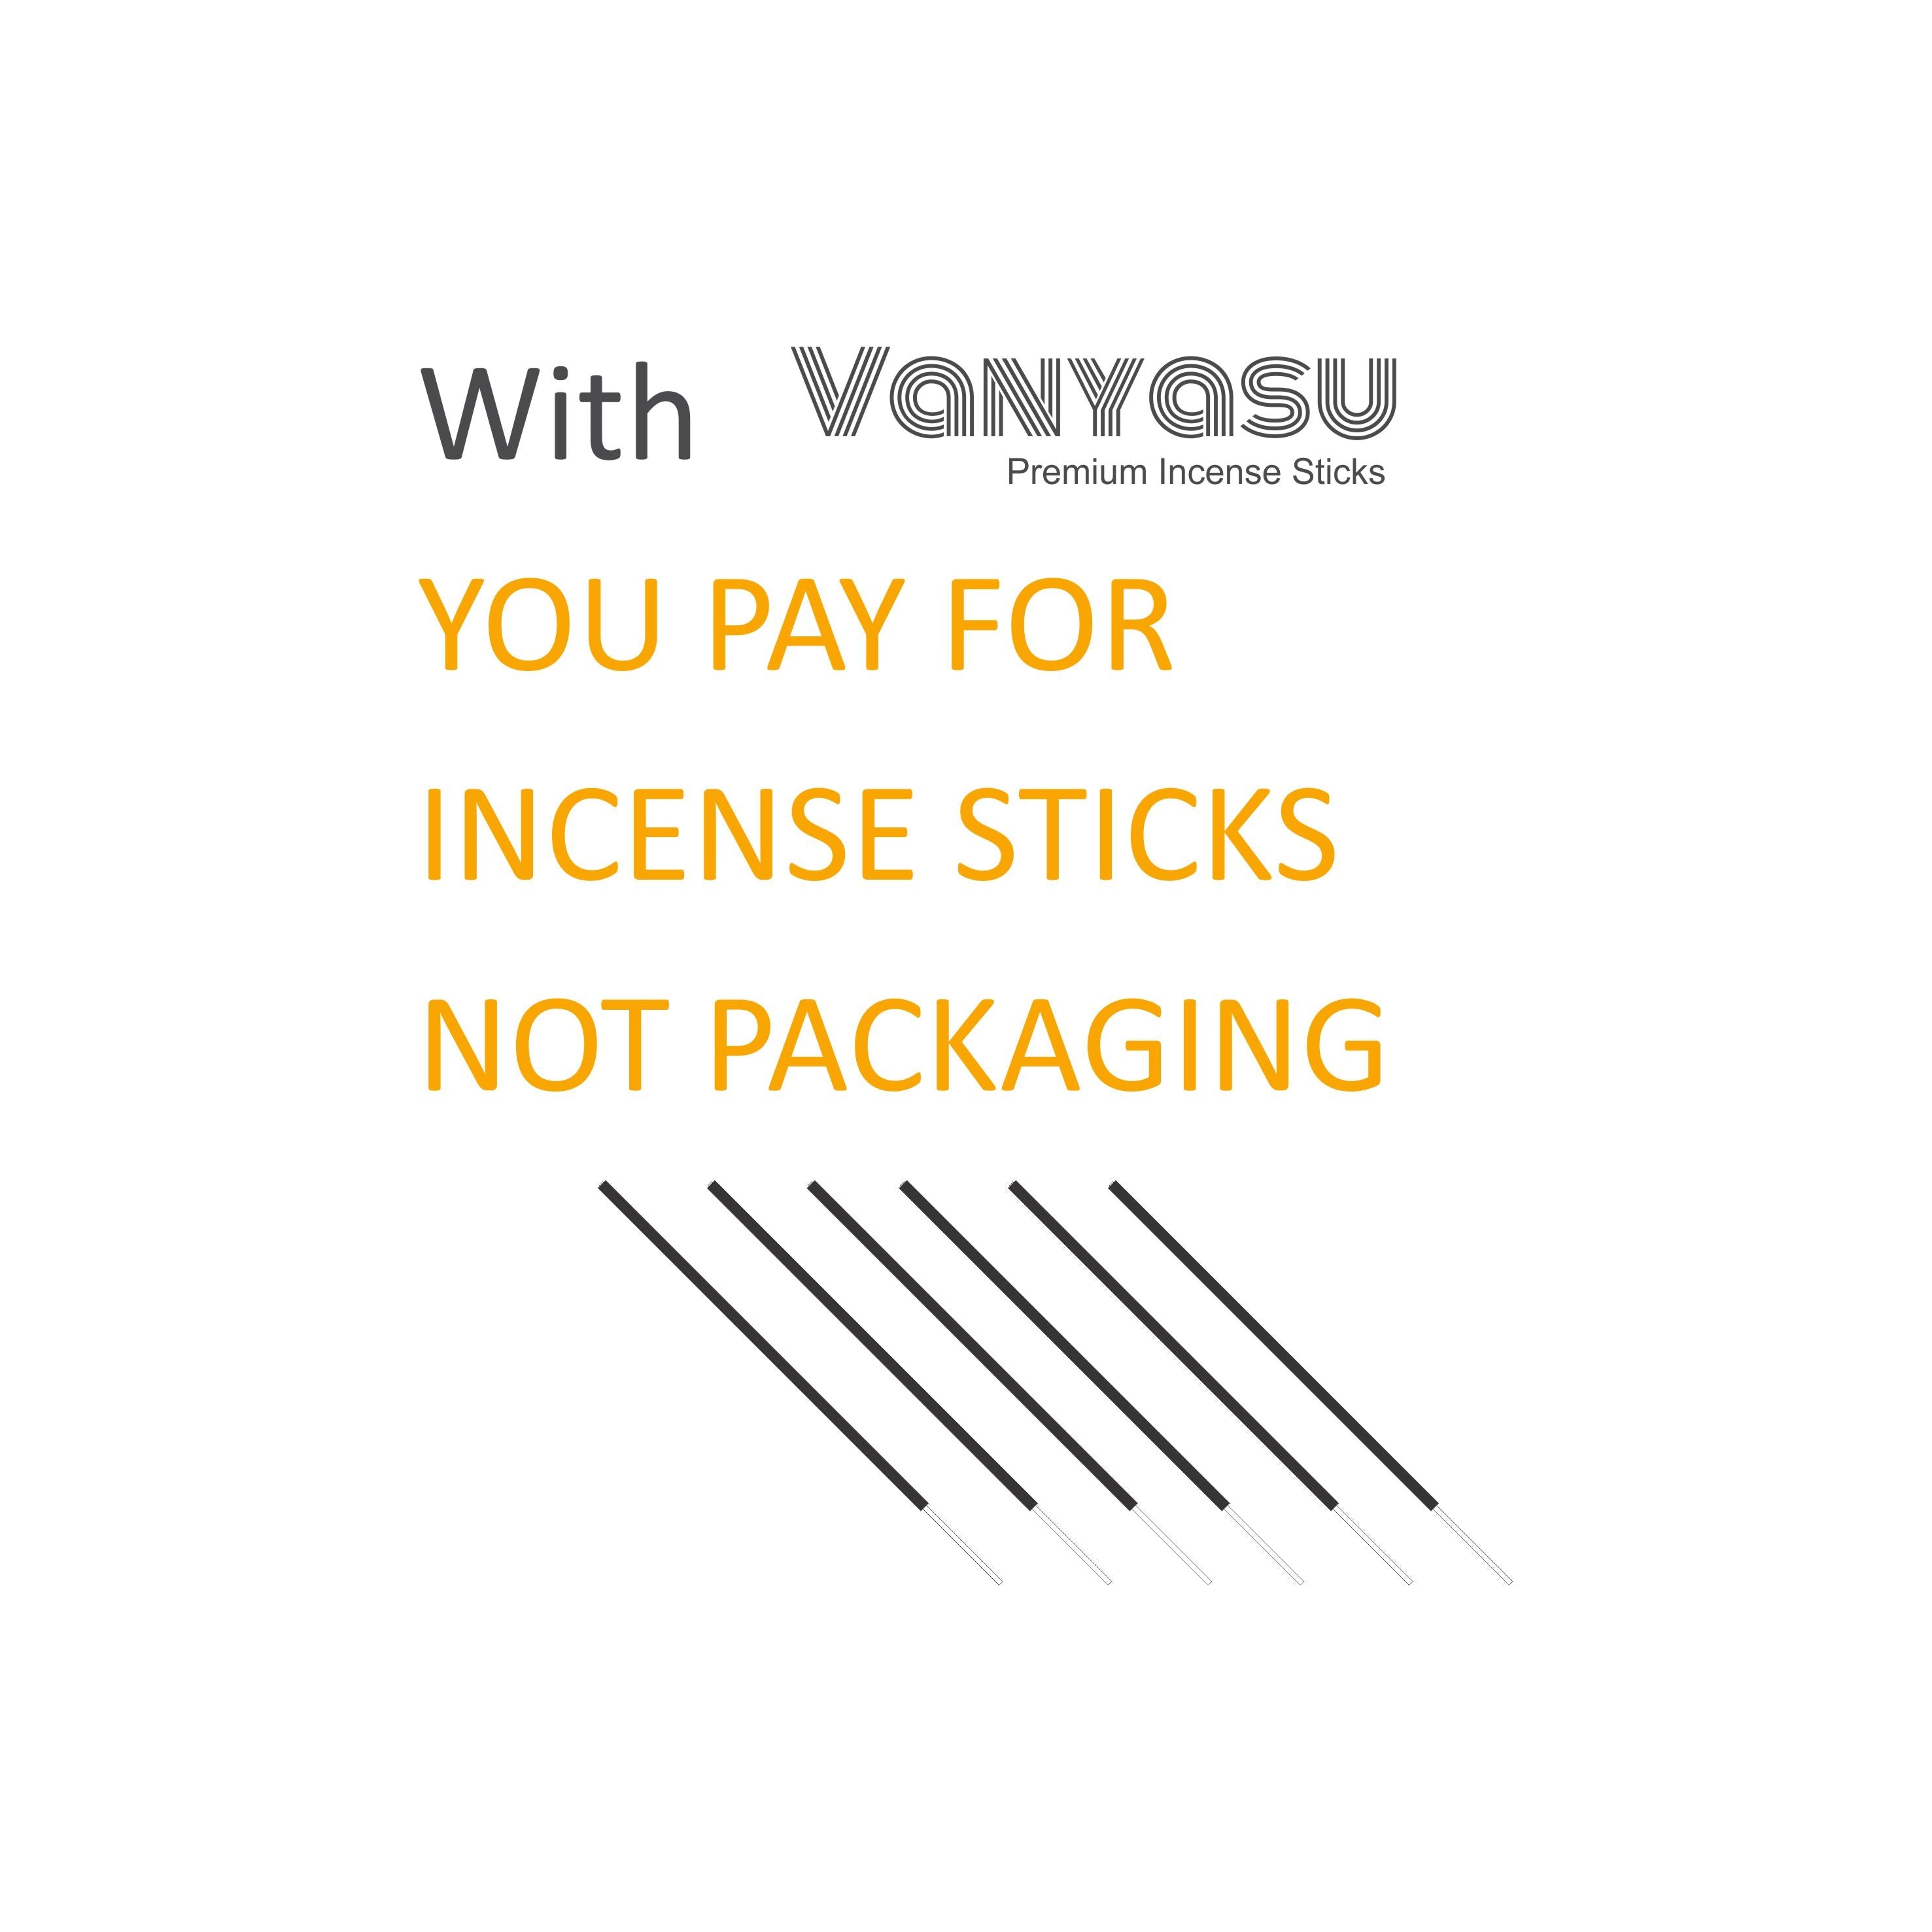 Vanyasu Premium Incense Sticks